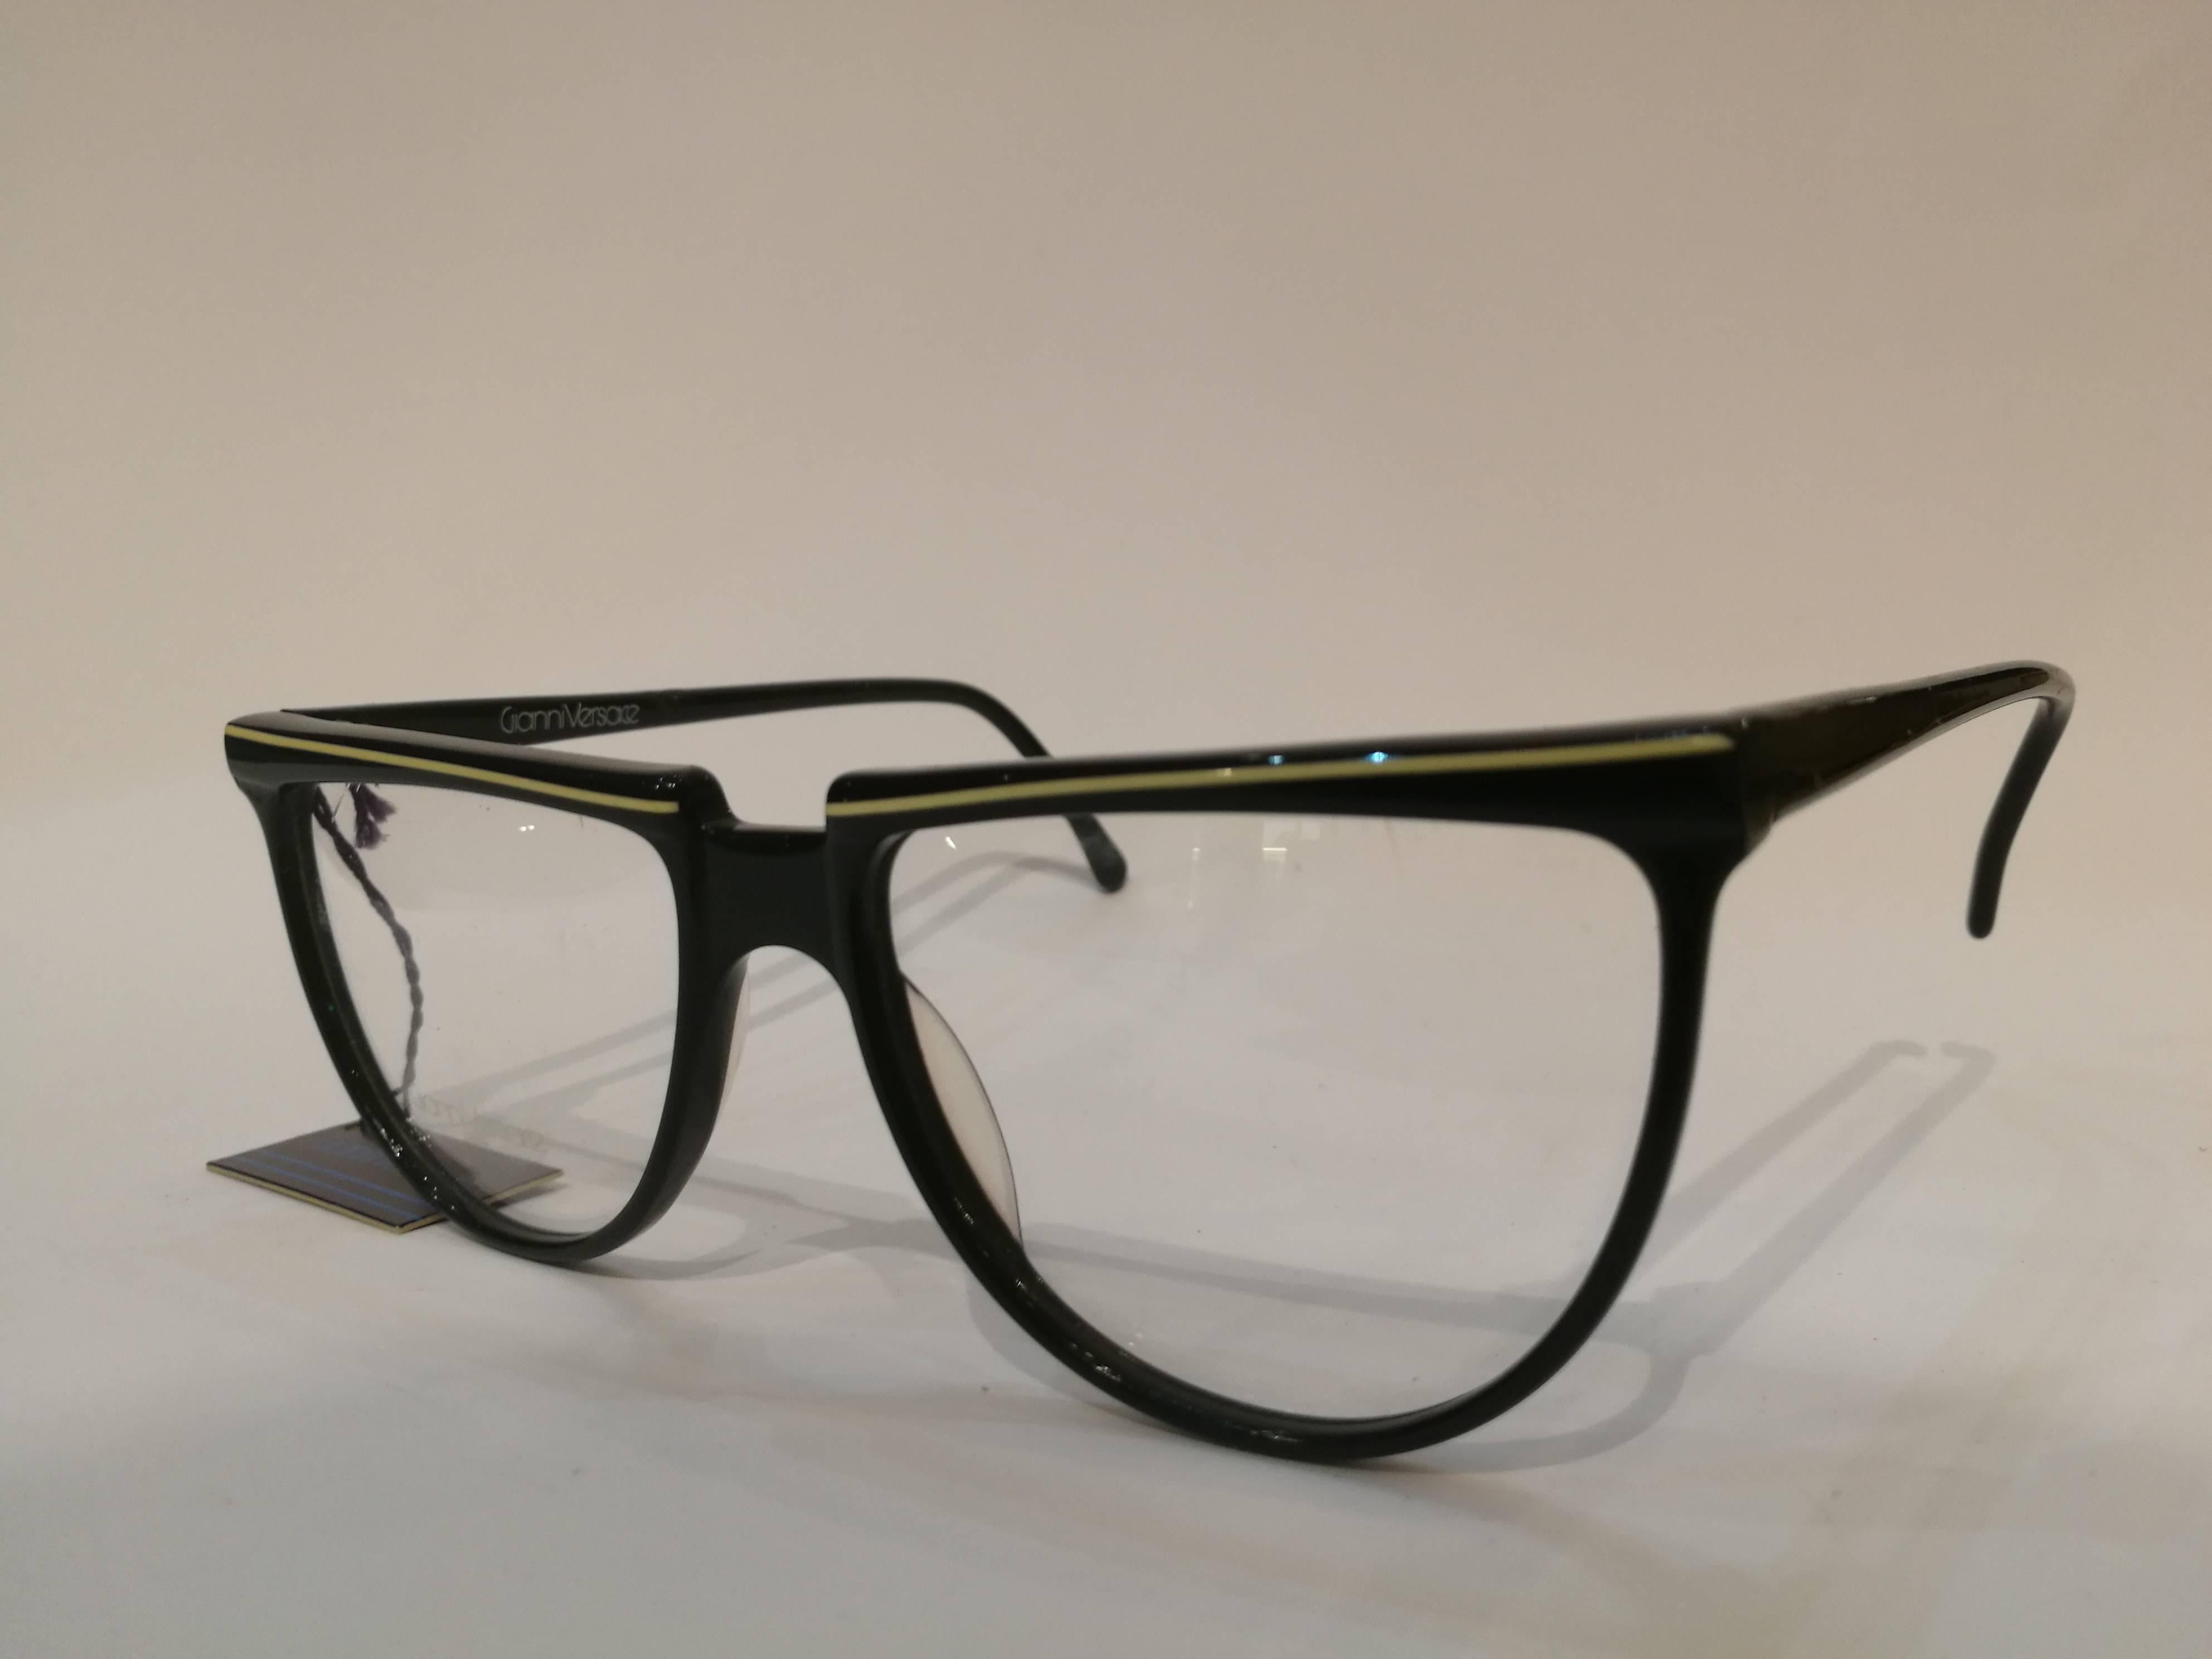 Beige Gianni Versace black frame glasses